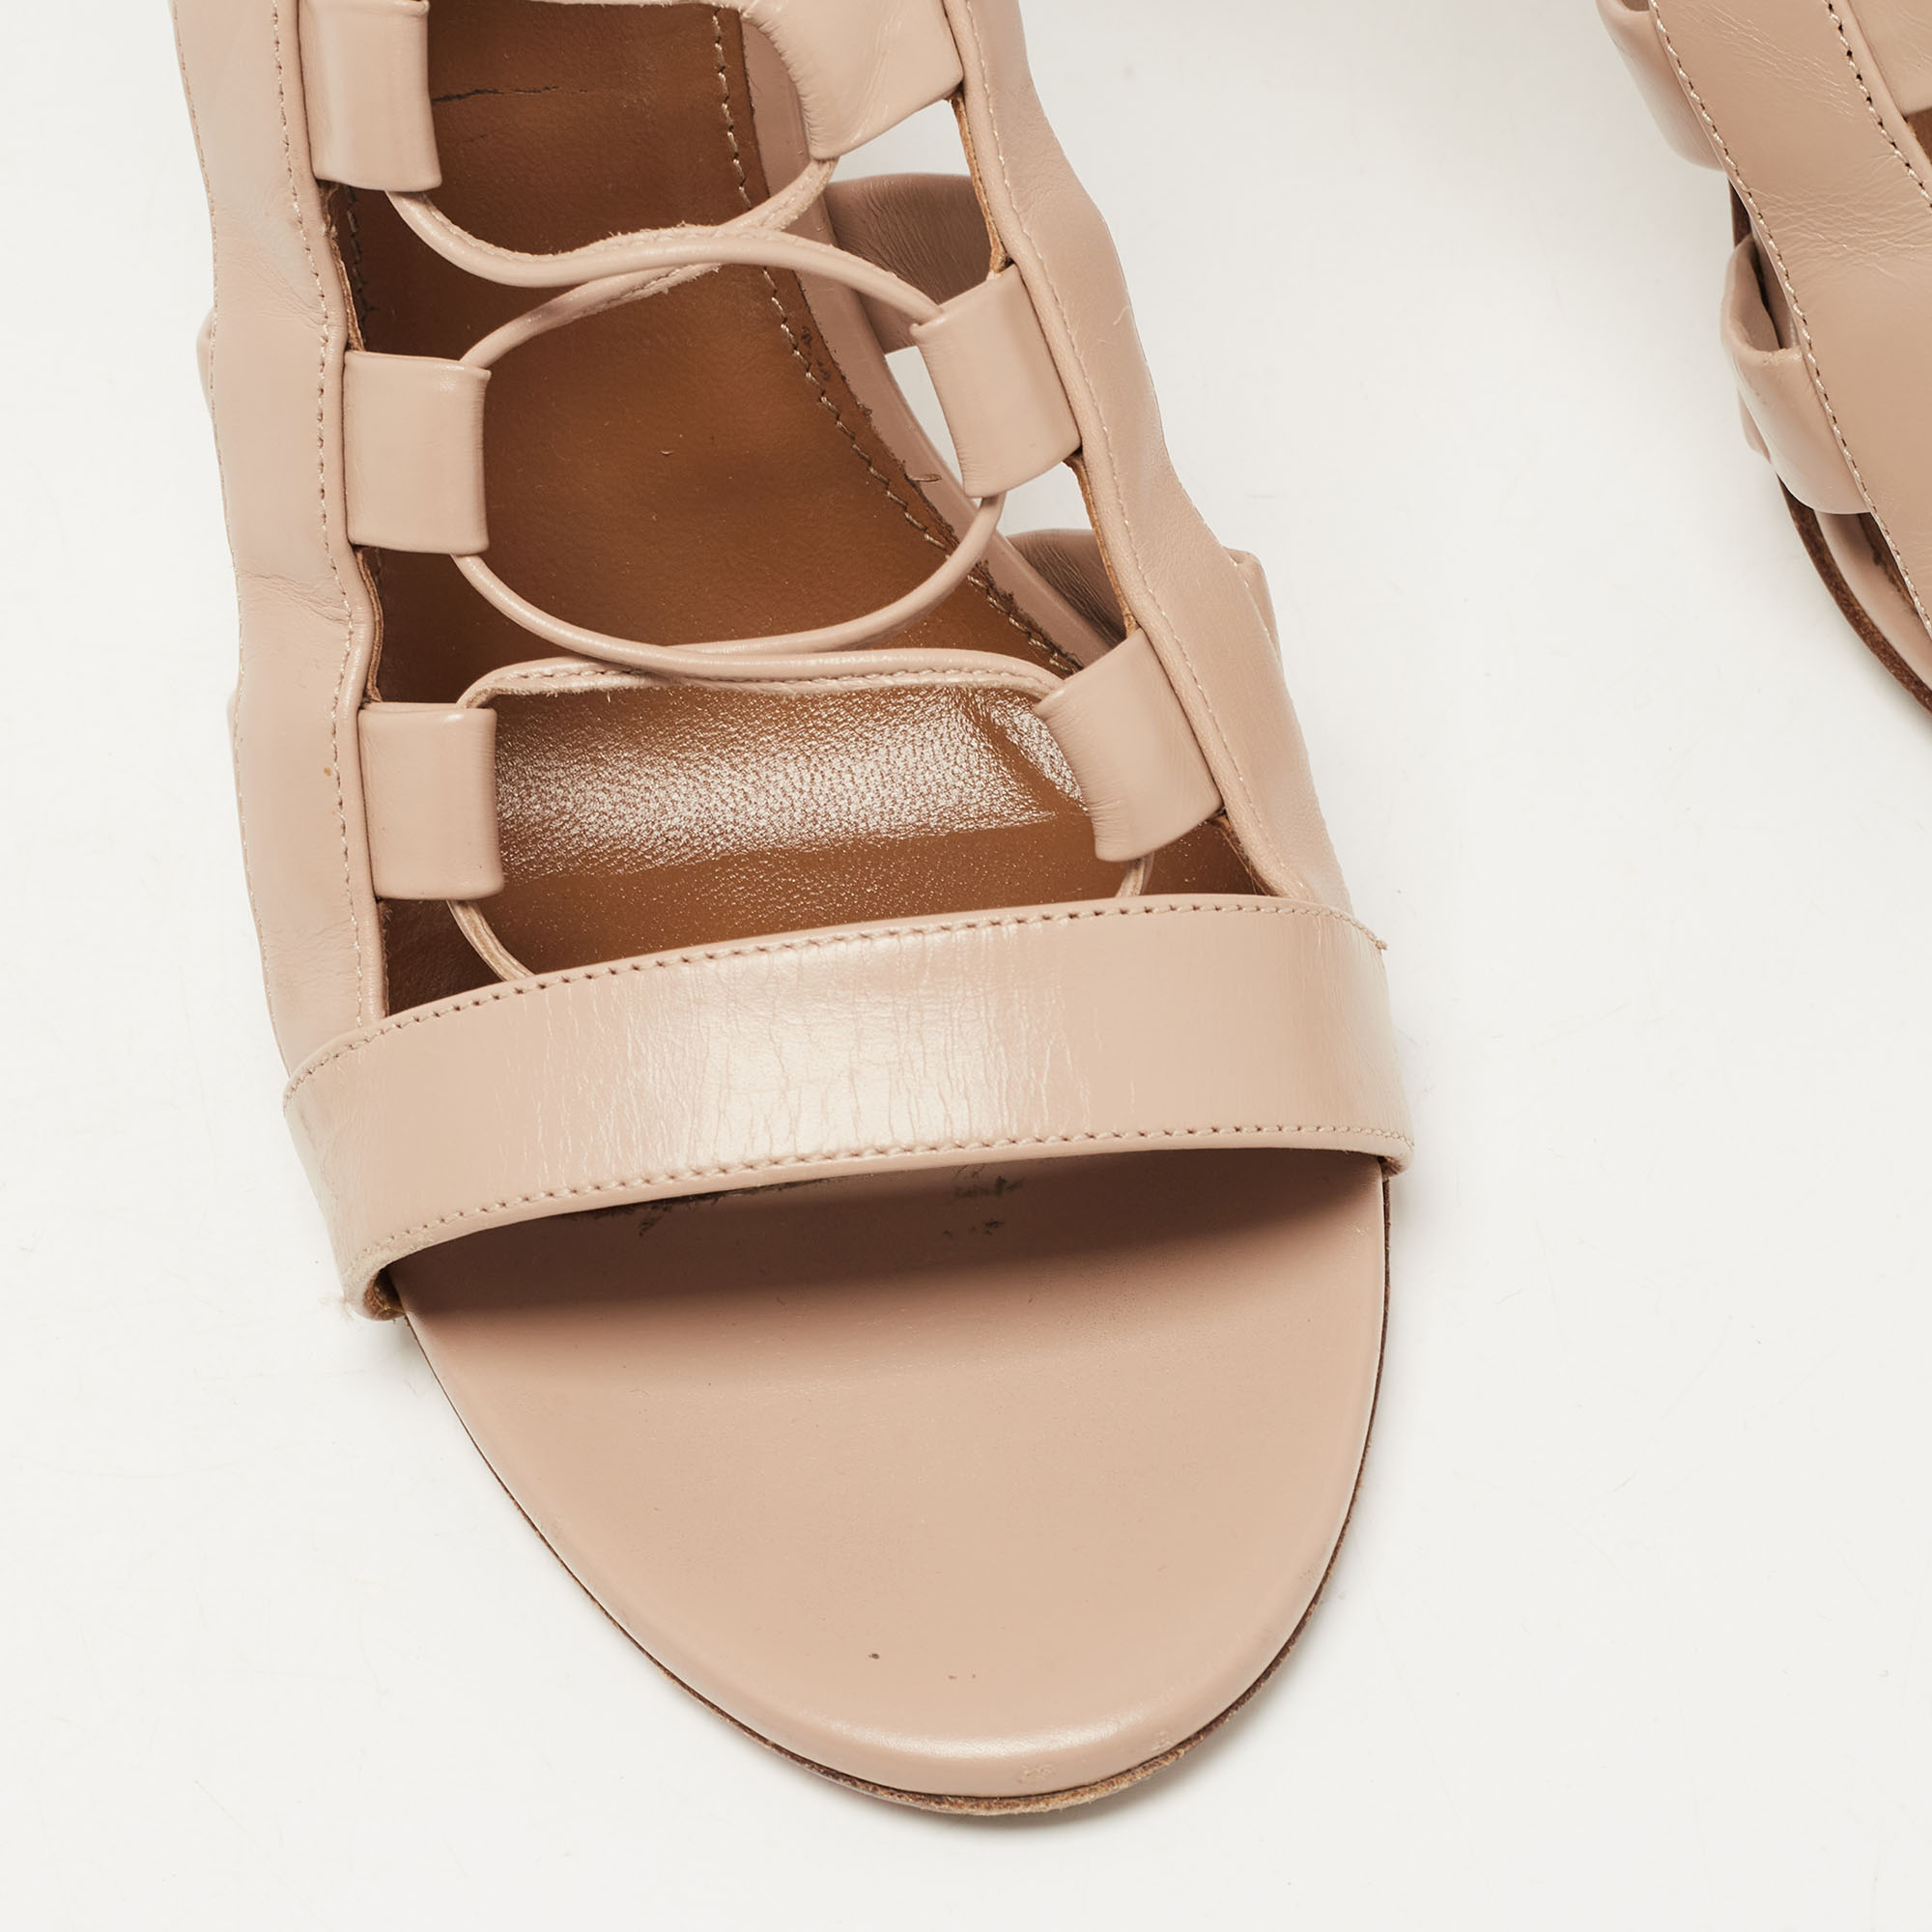 Aquazzura Dusty Pink Leather Amazon Sandals Size 39